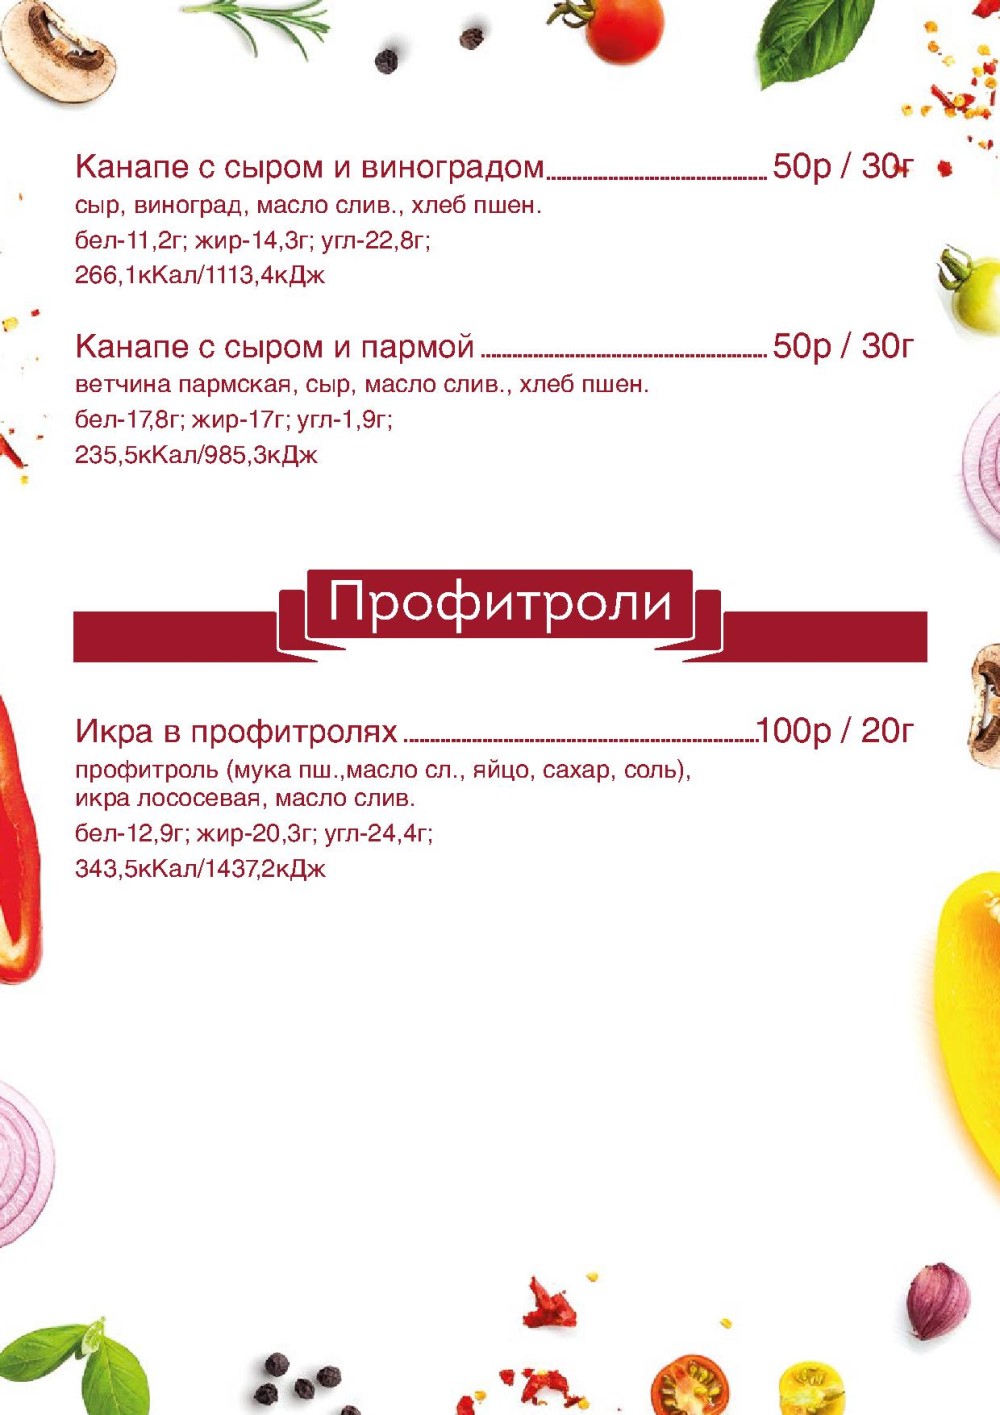 Блюда на заказ в Лэнде г. Санкт-Петербург. Каталог акций с ценами на товары